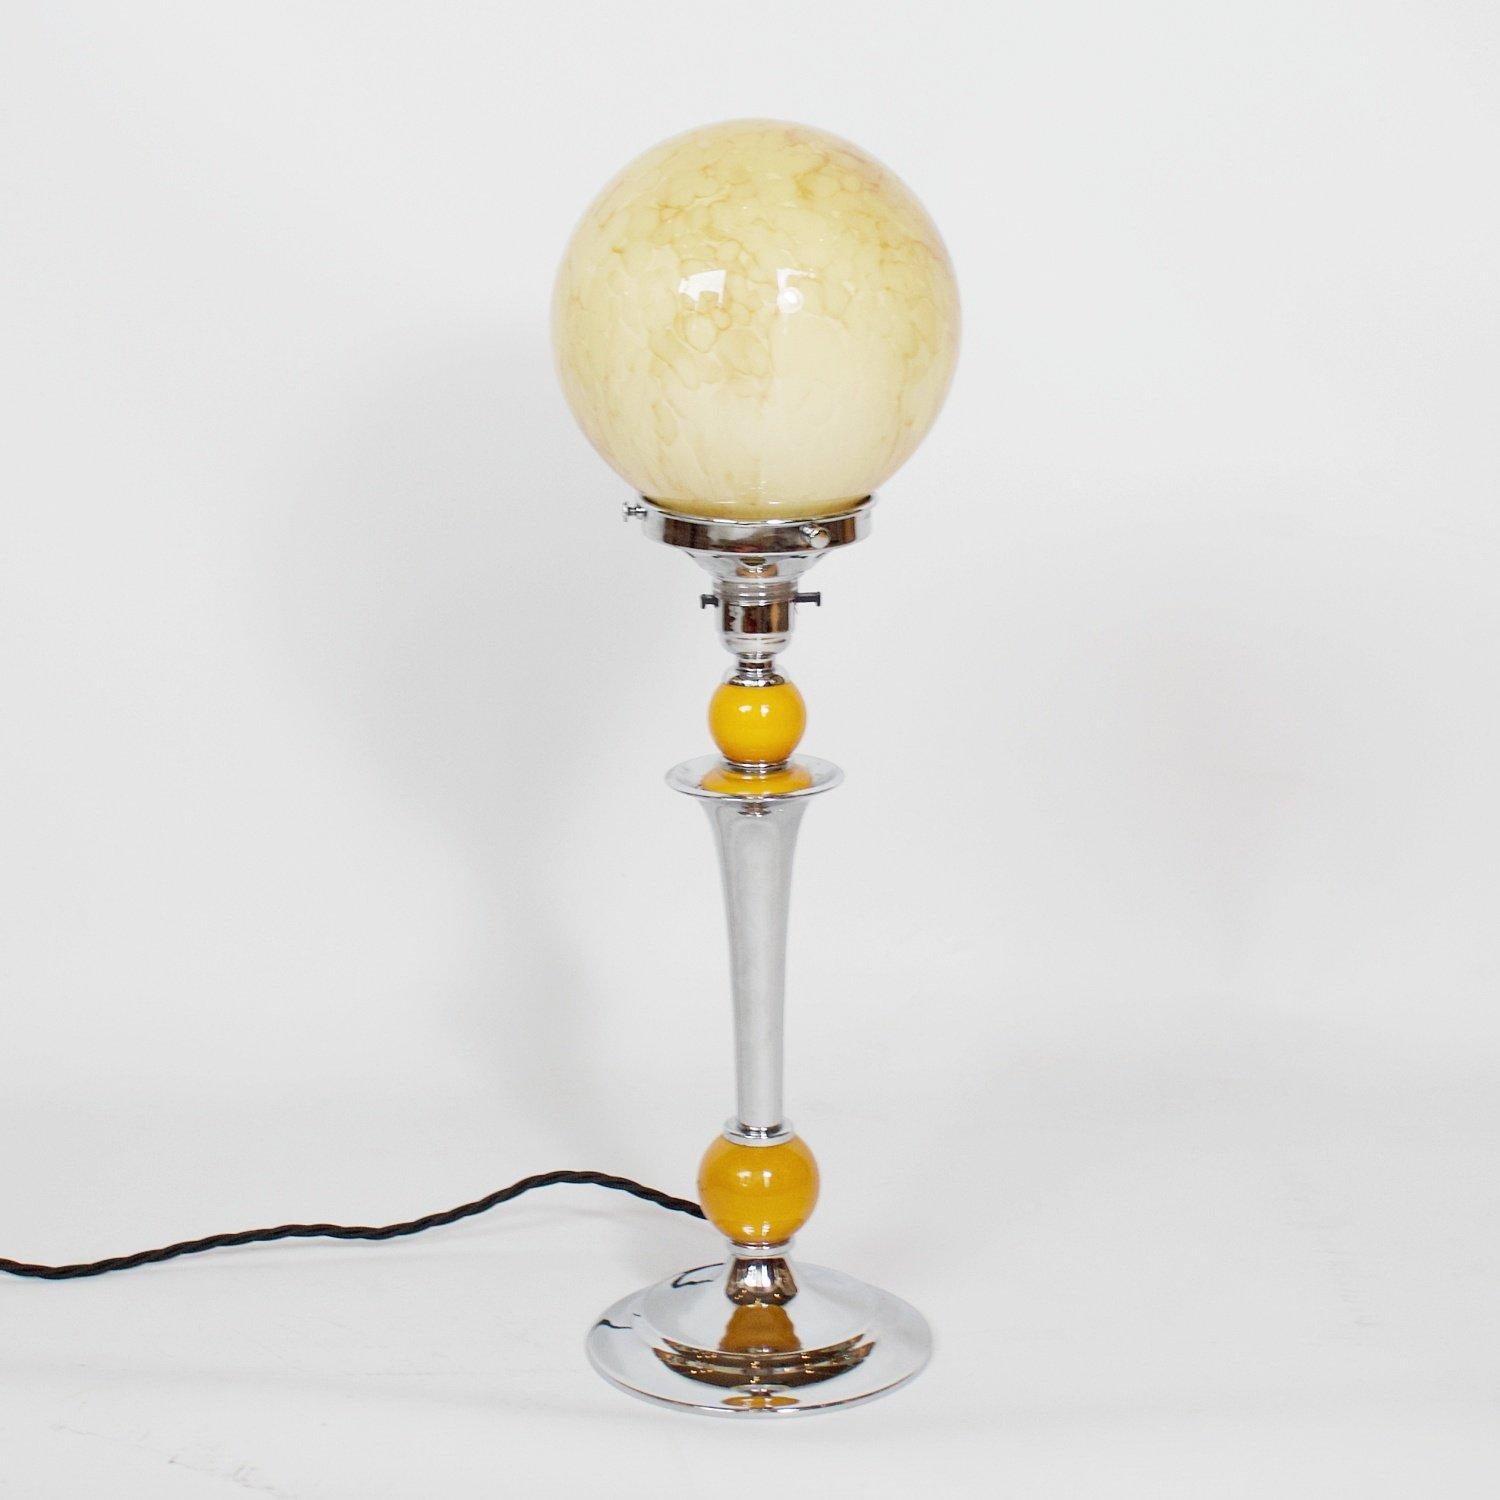 20th Century Art Deco Bakelite and Chromed Metal Table Lamp